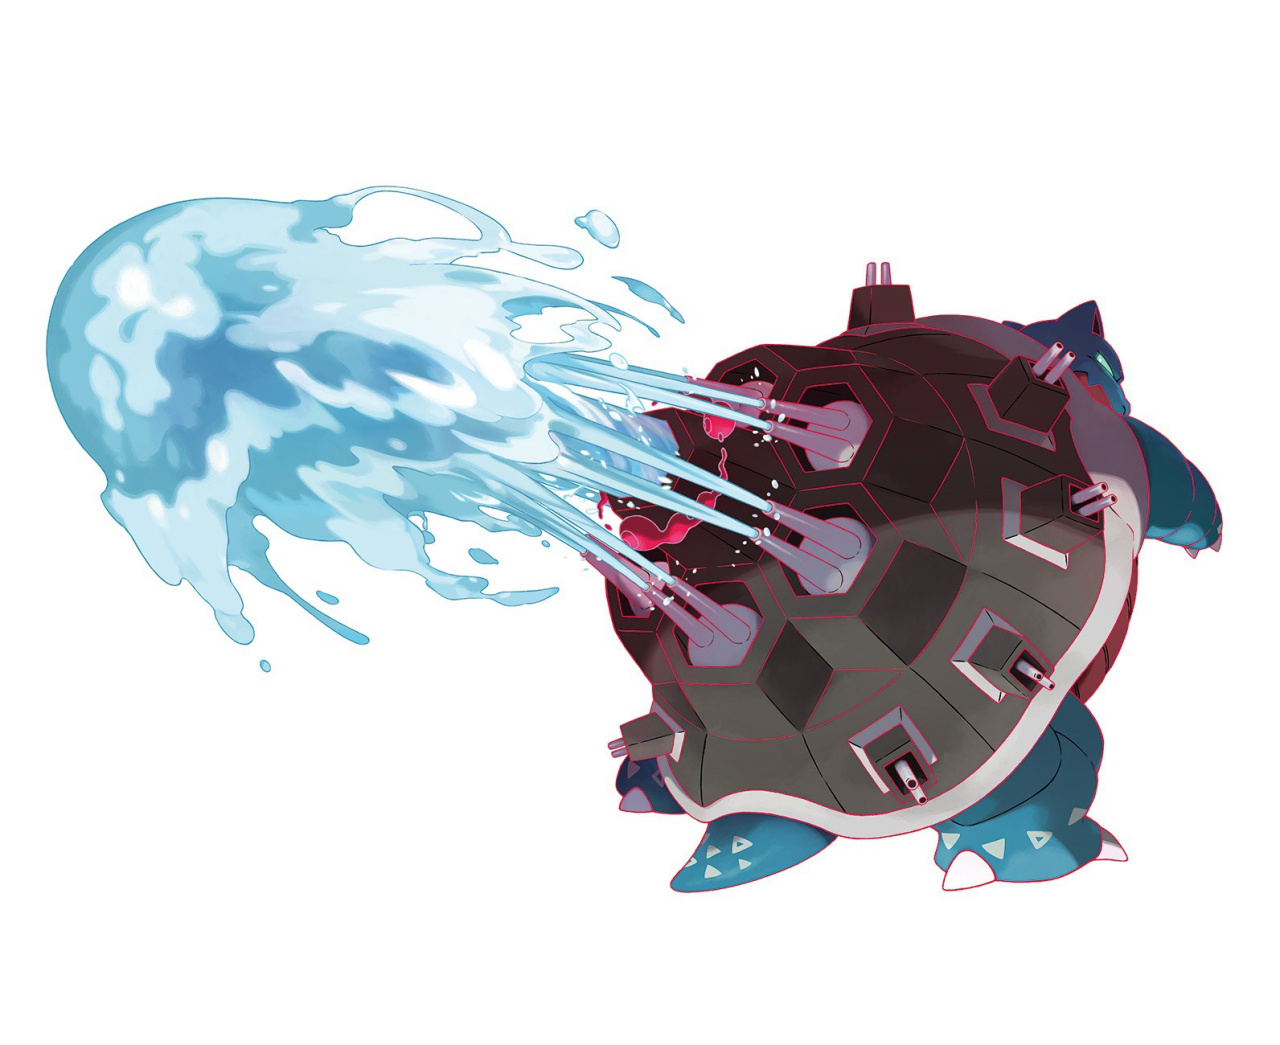 Gallery: Pokémon Sword And Shield Isle Of Armor - Glorious Key Art